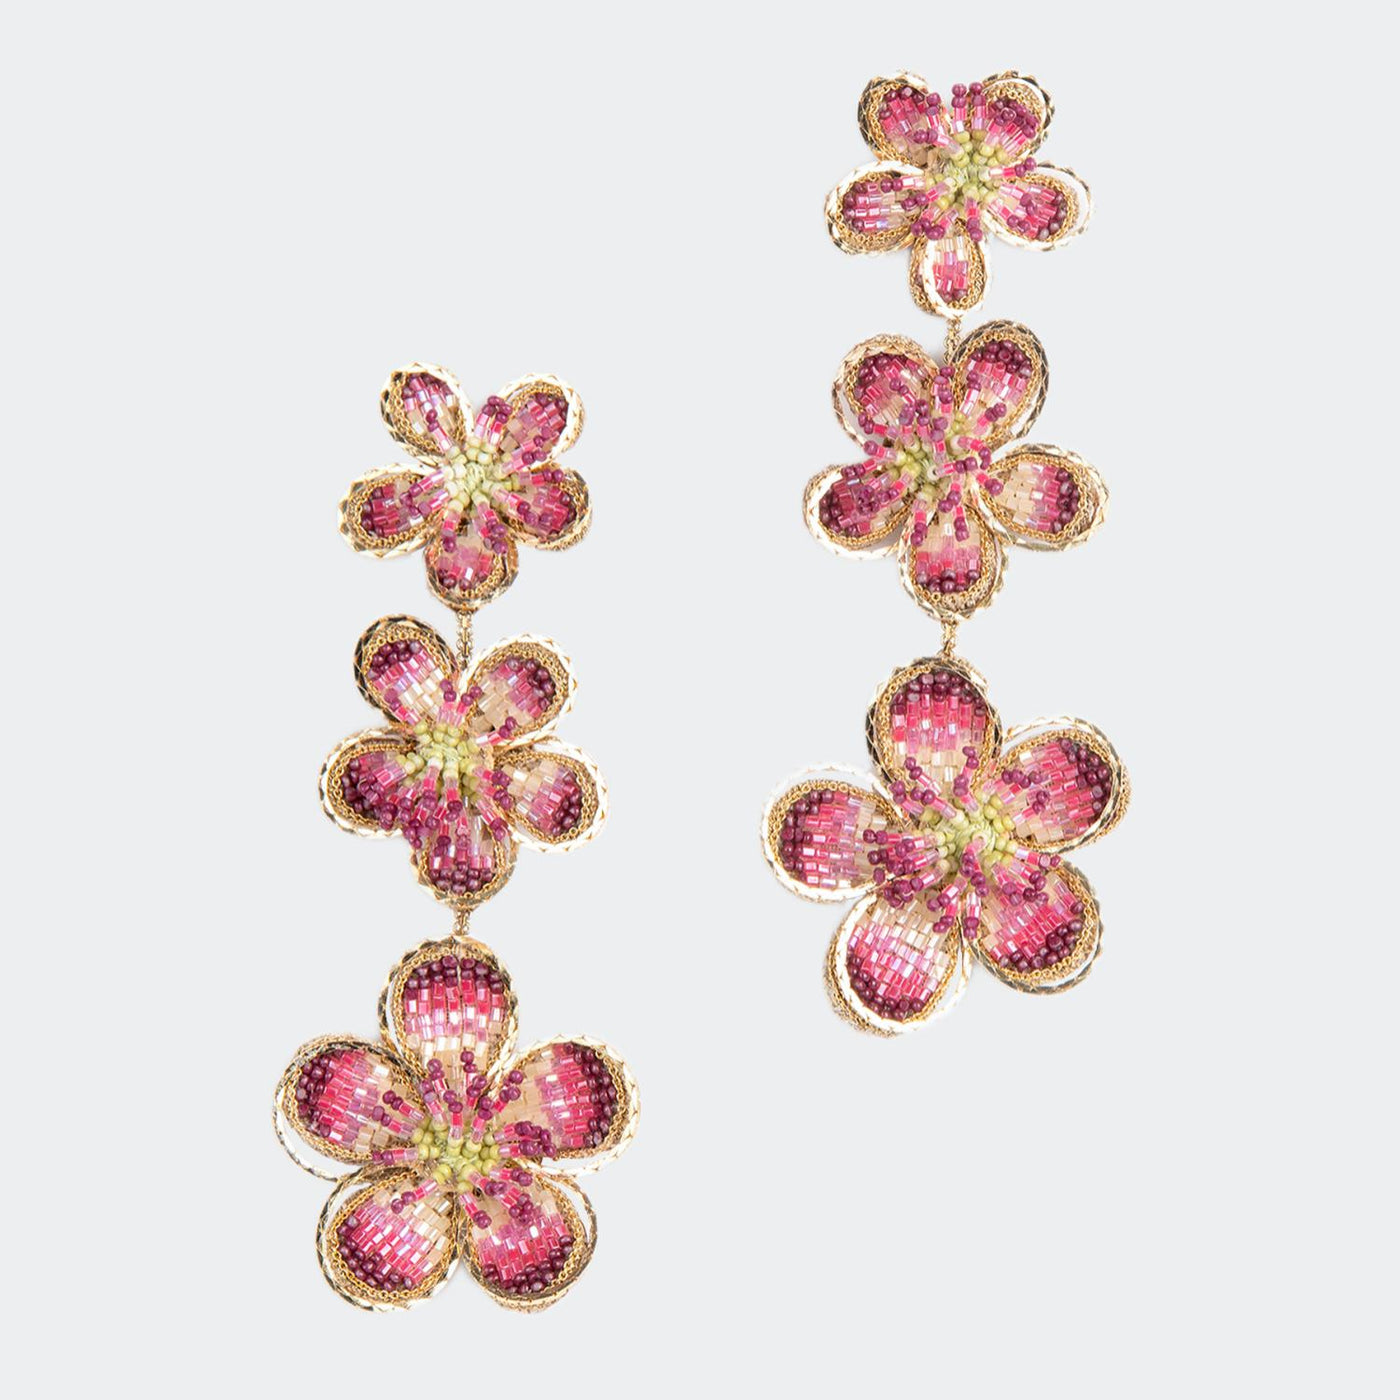 DEEPA GURNANI Pink Cleome Earring handcrafted using glass beads